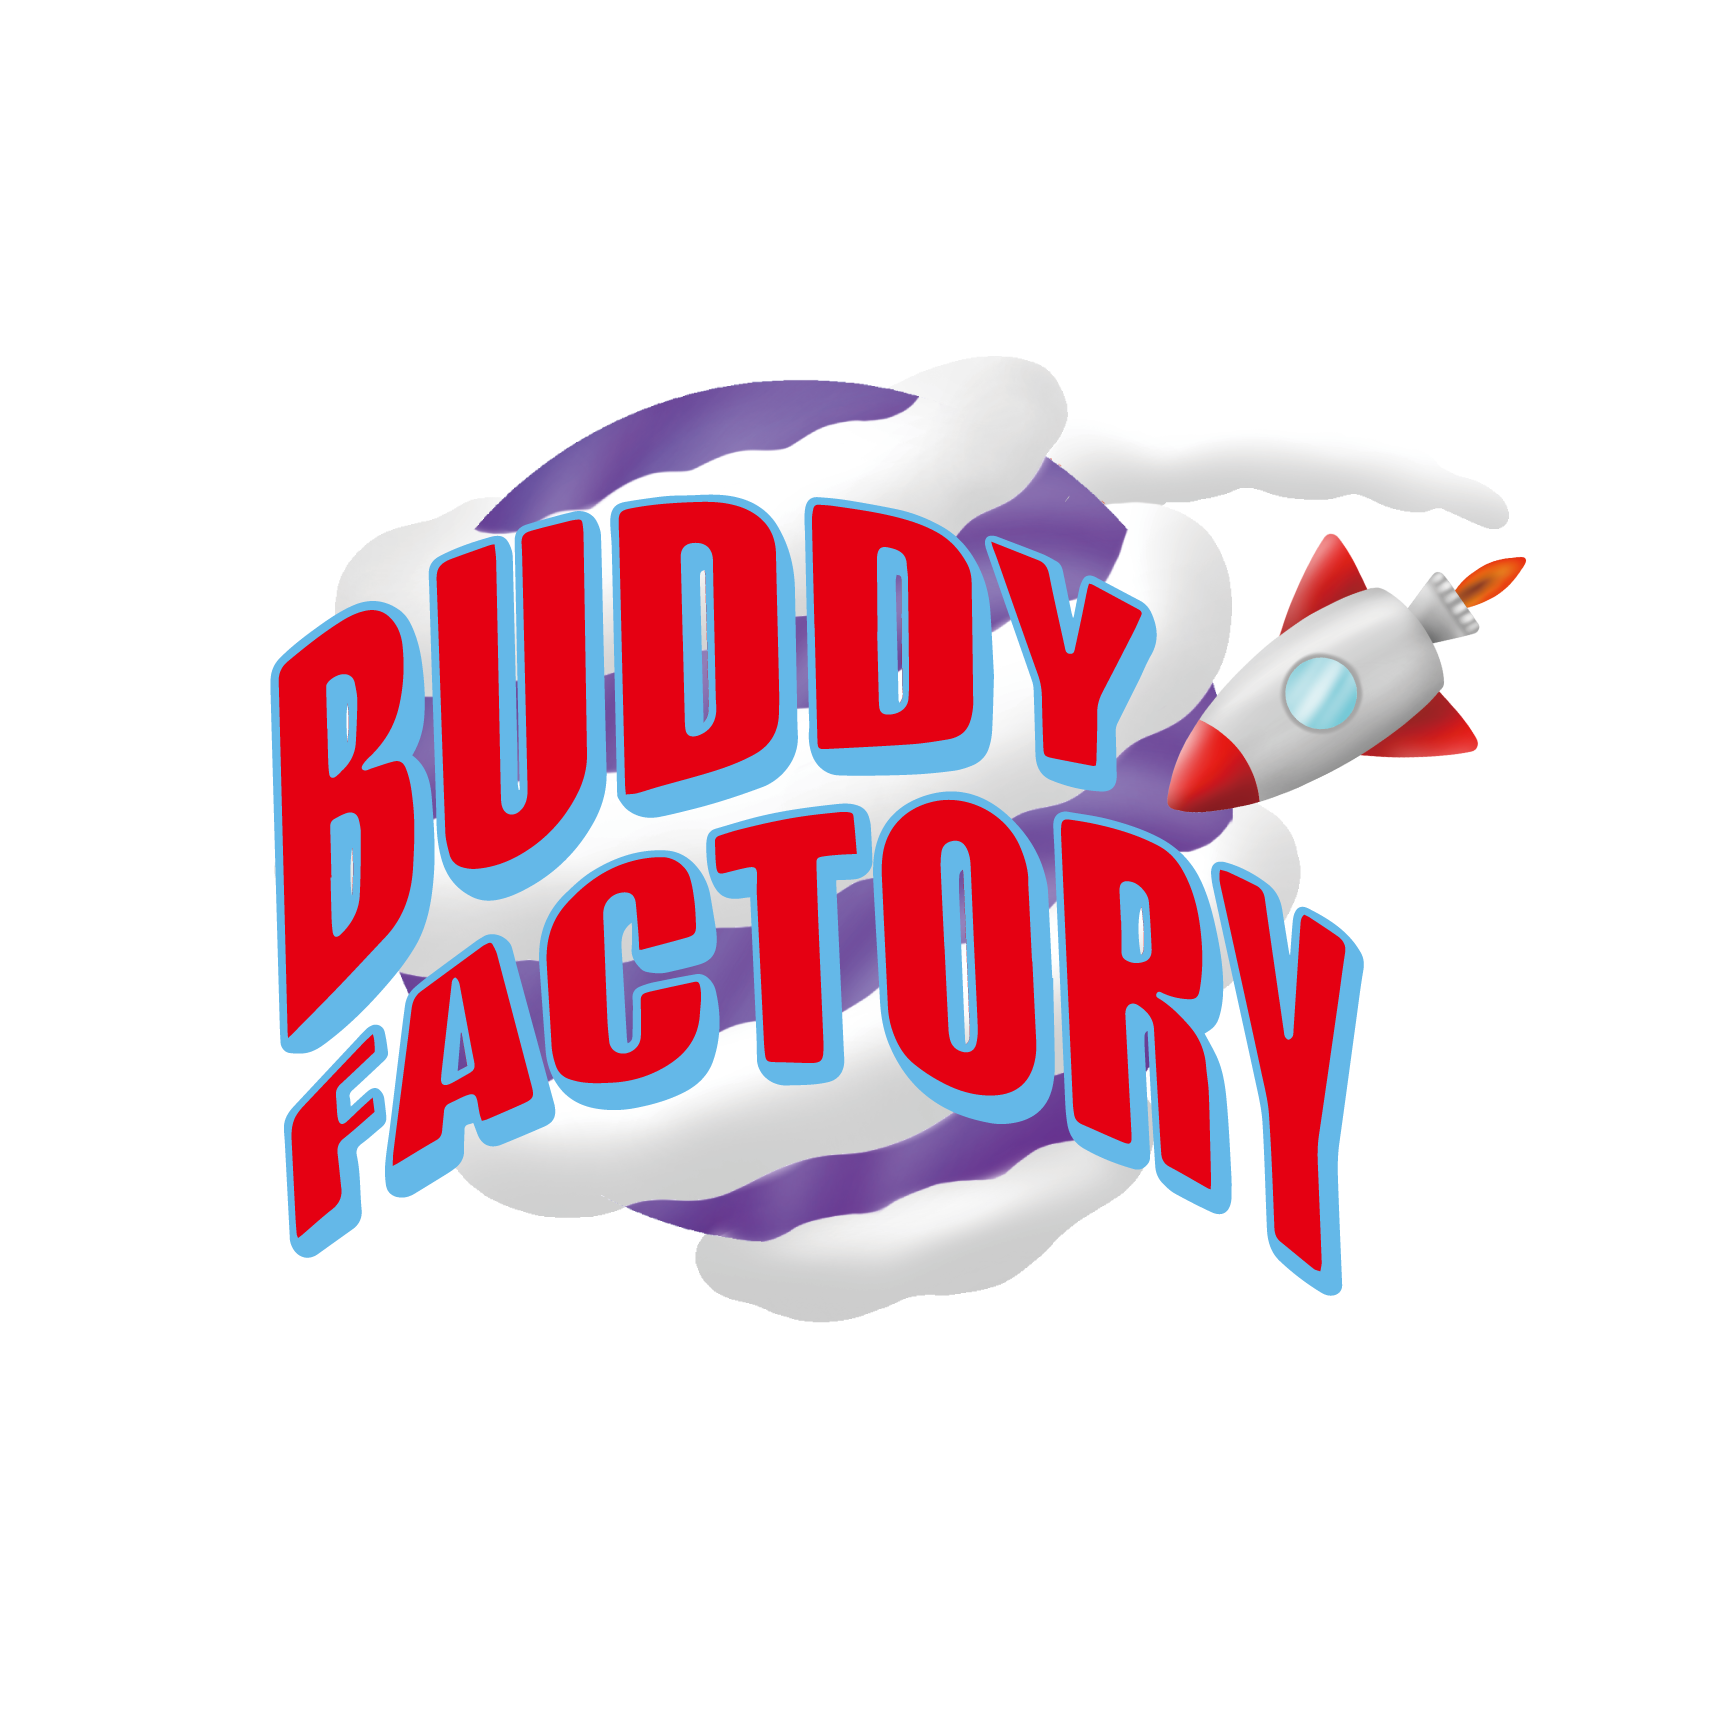 Buddy Factory